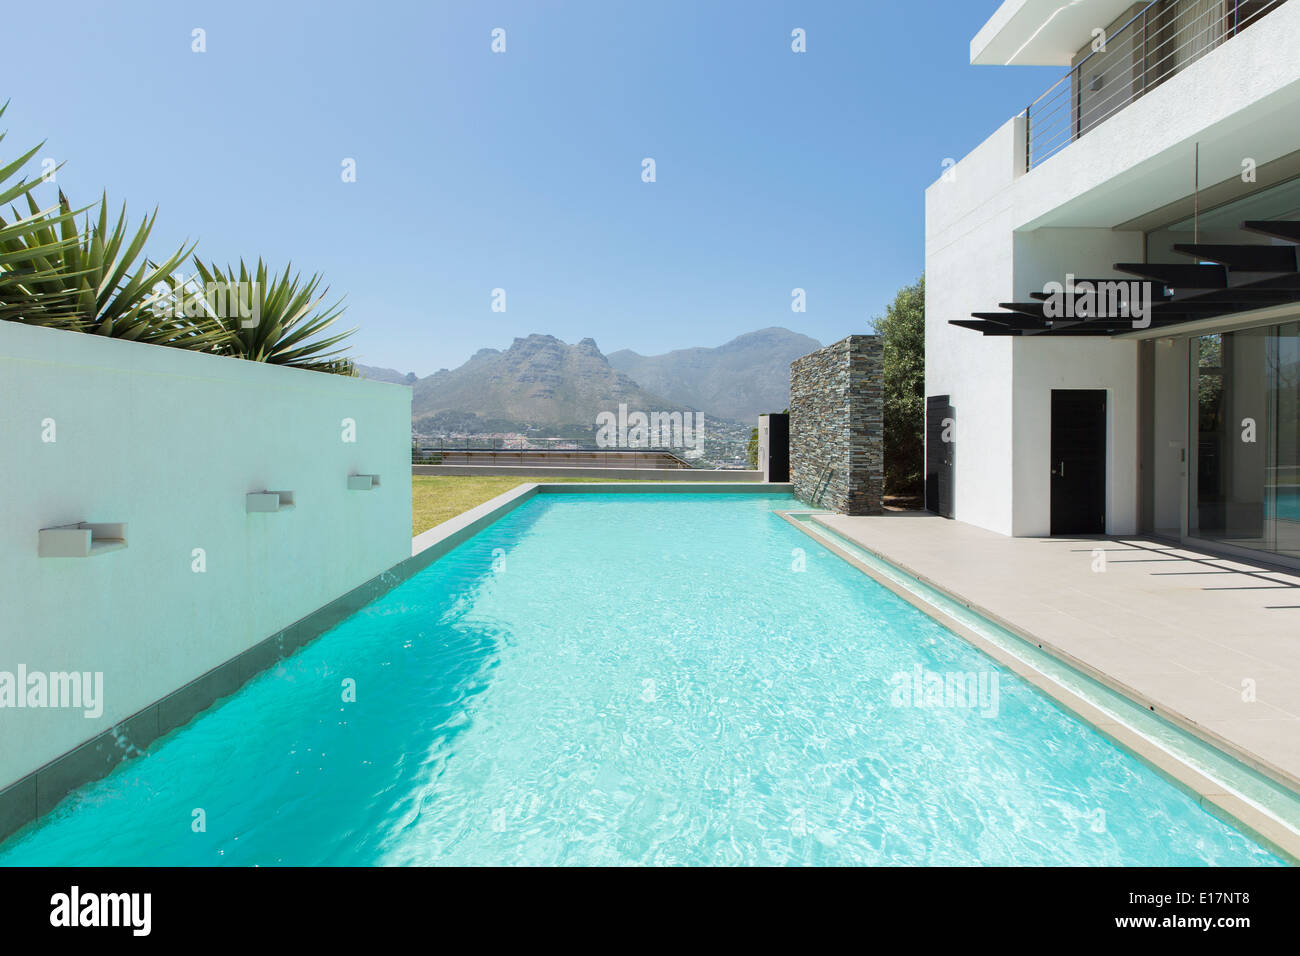 Luxury lap pool overlooking mountains Stock Photo